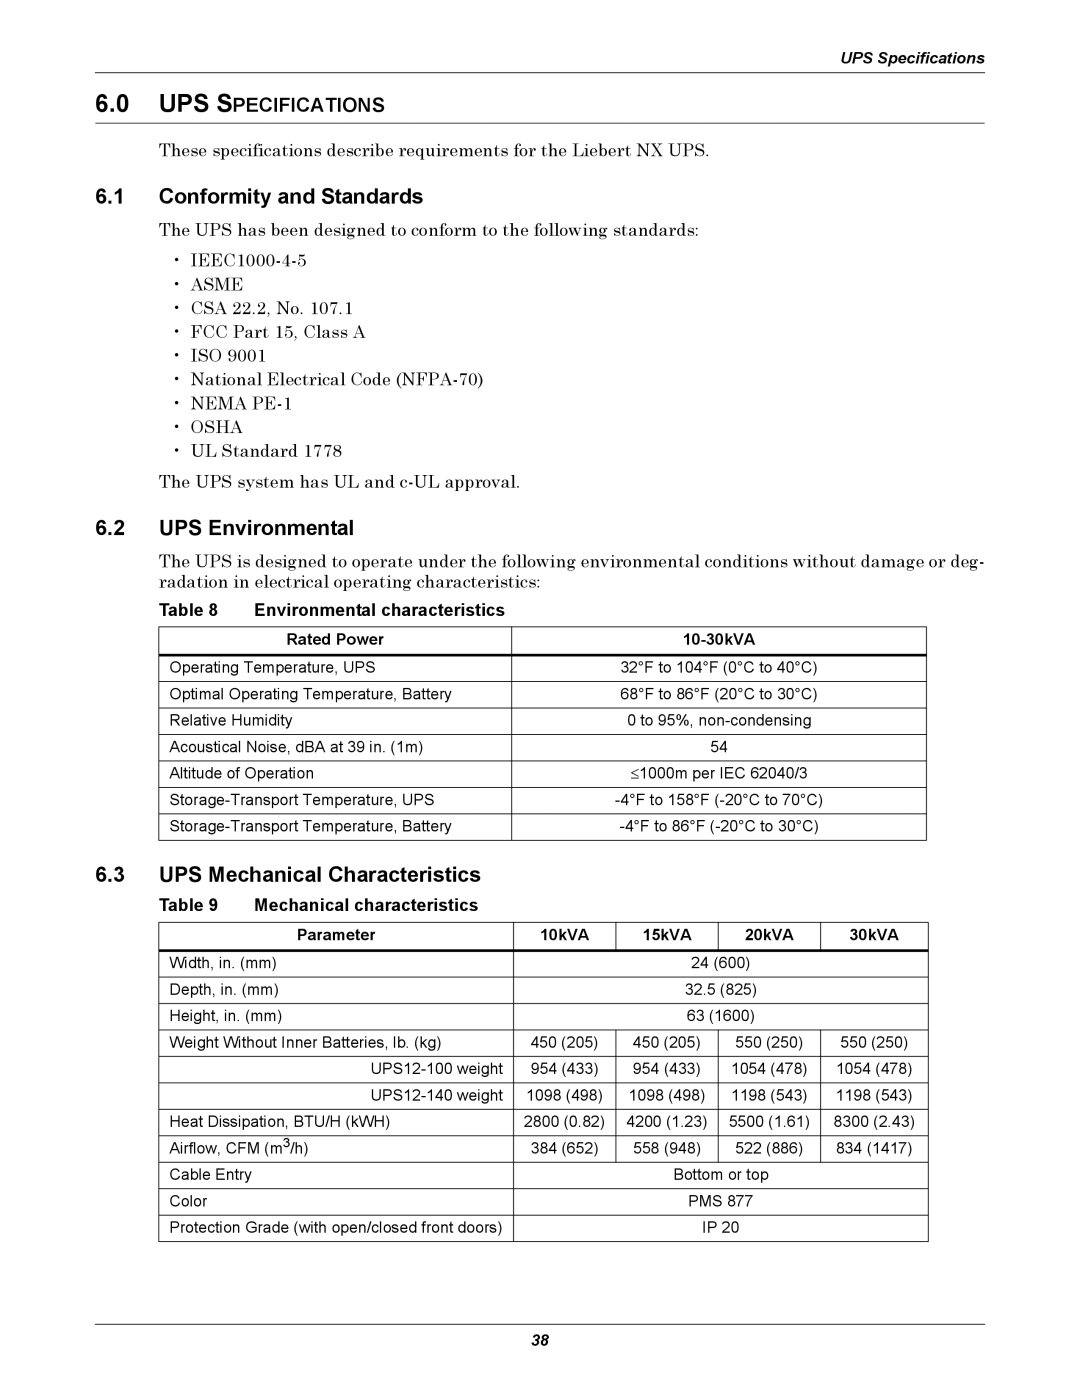 Emerson 10-30kVA, 208V 6.1Conformity and Standards, 6.2UPS Environmental, 6.3UPS Mechanical Characteristics 